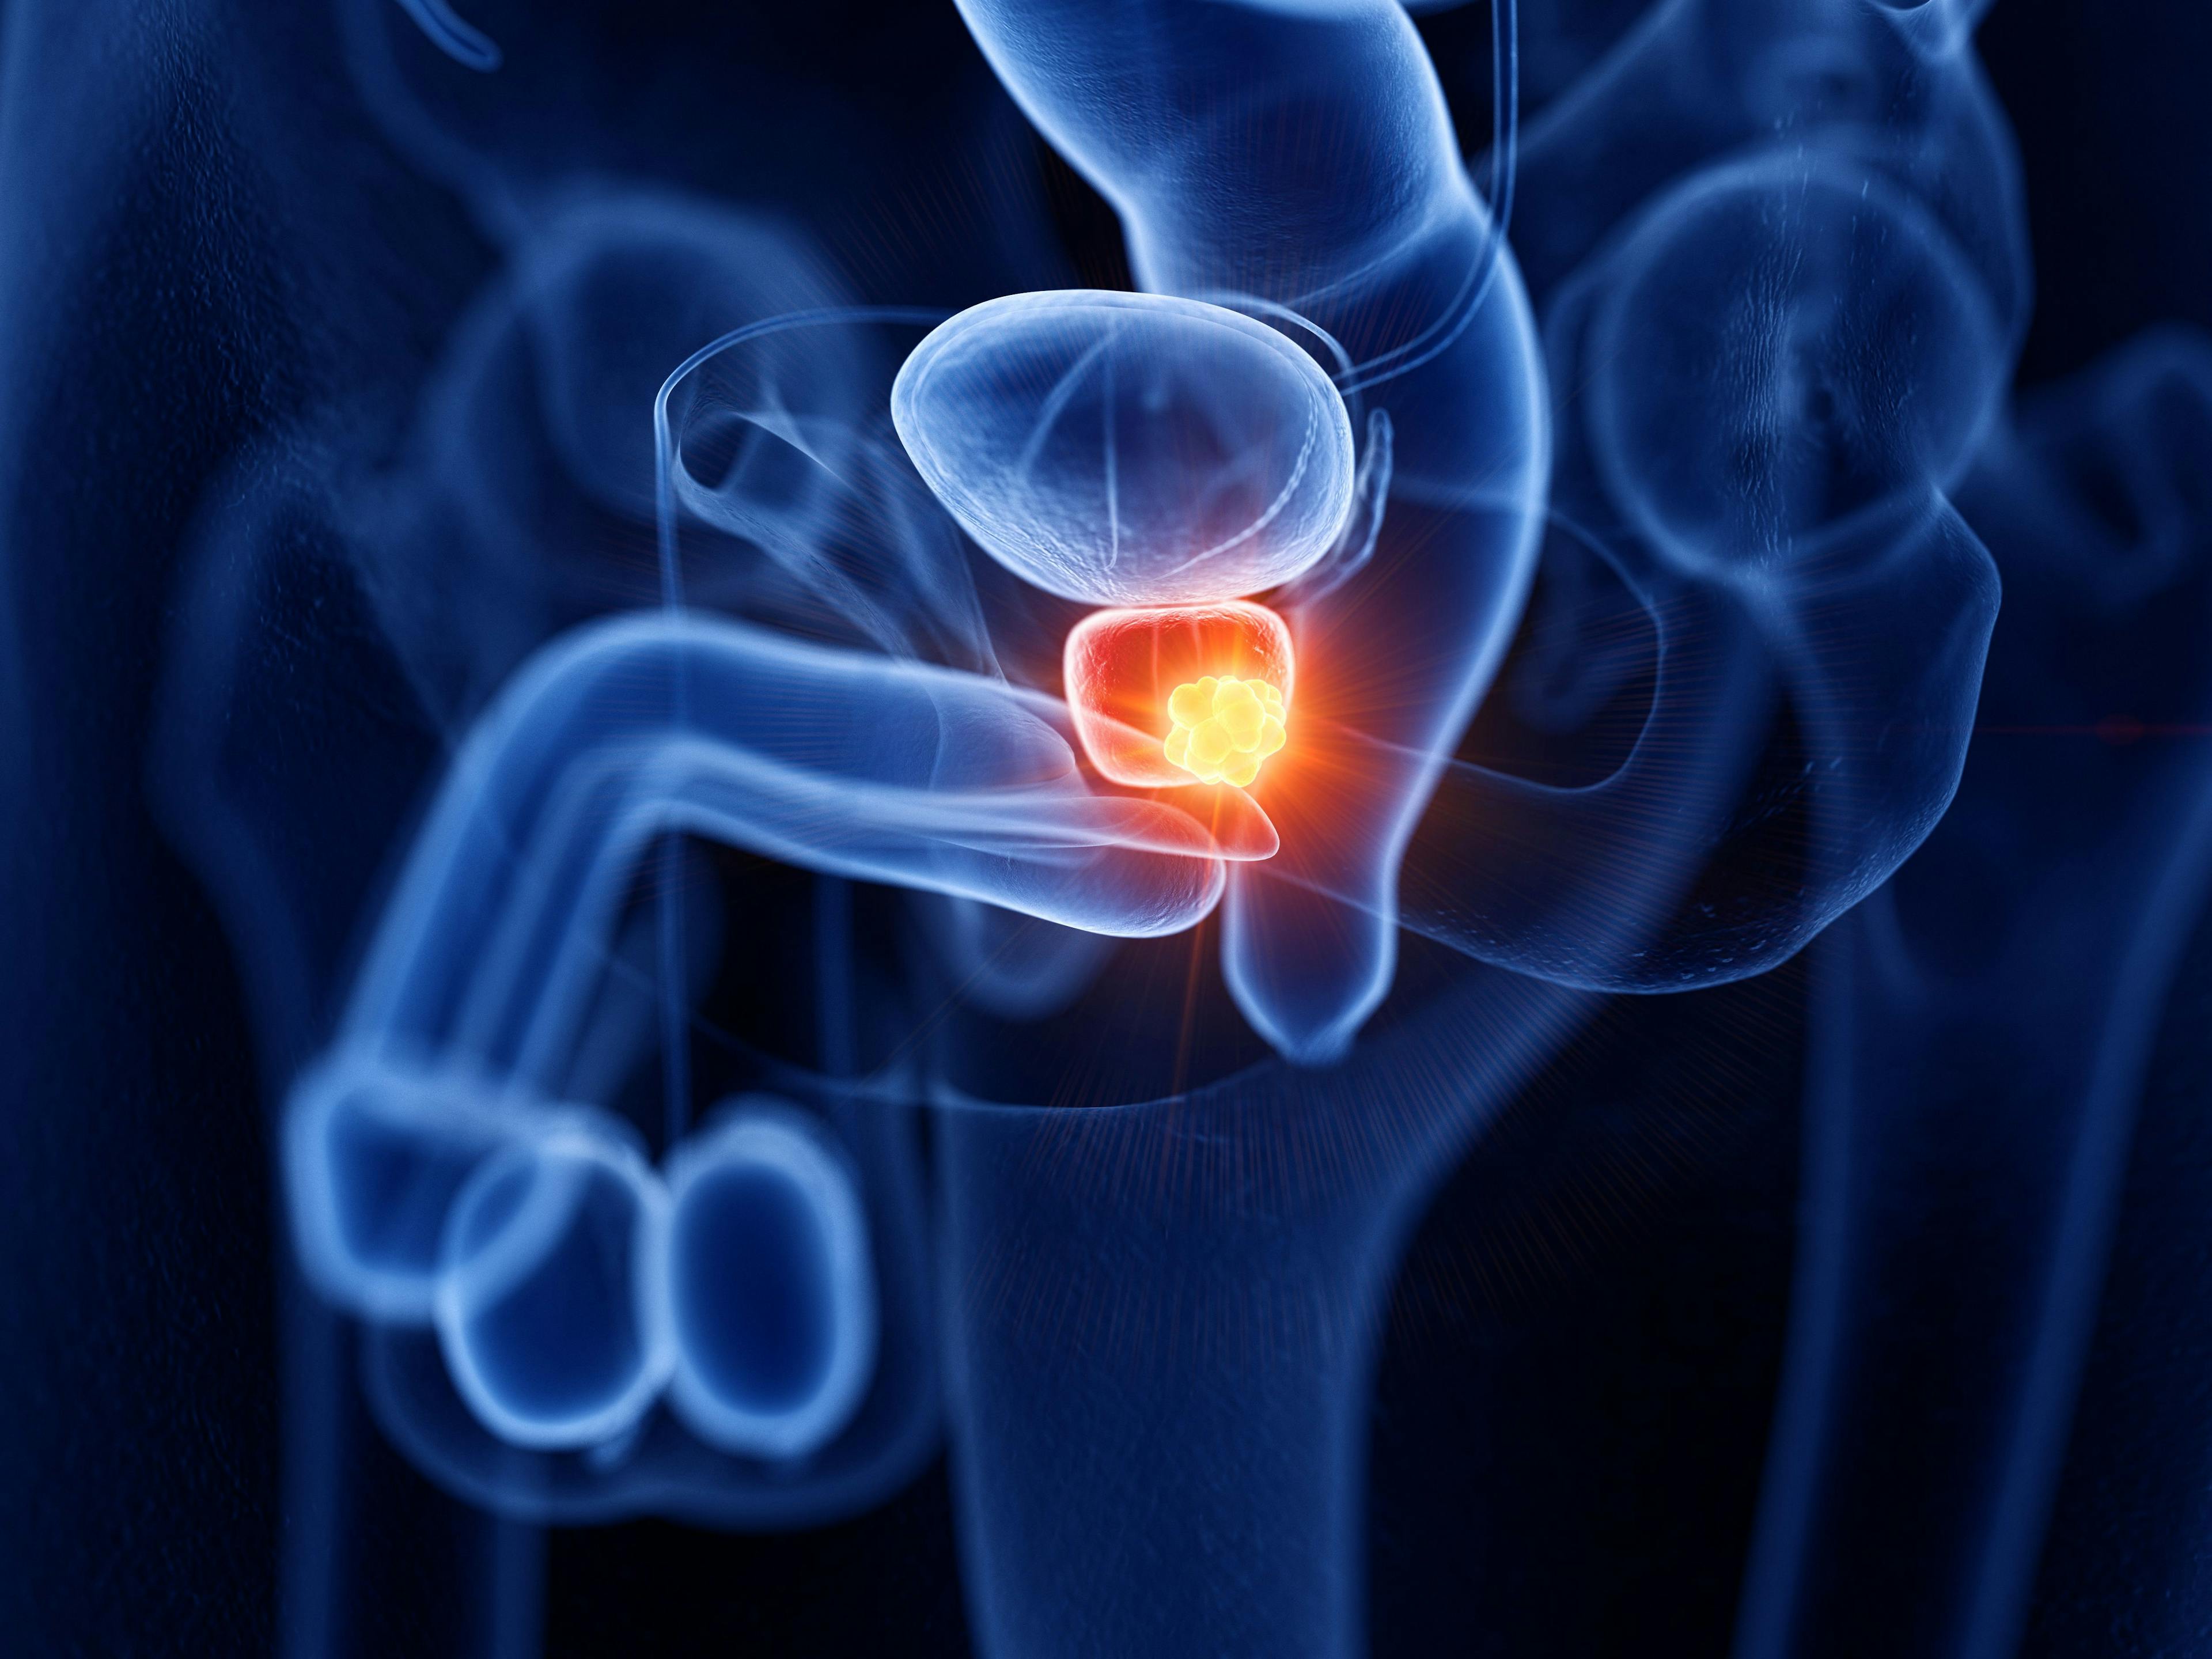 3D rendering of prostate cancer: ©SciePro - stock.adobe.com